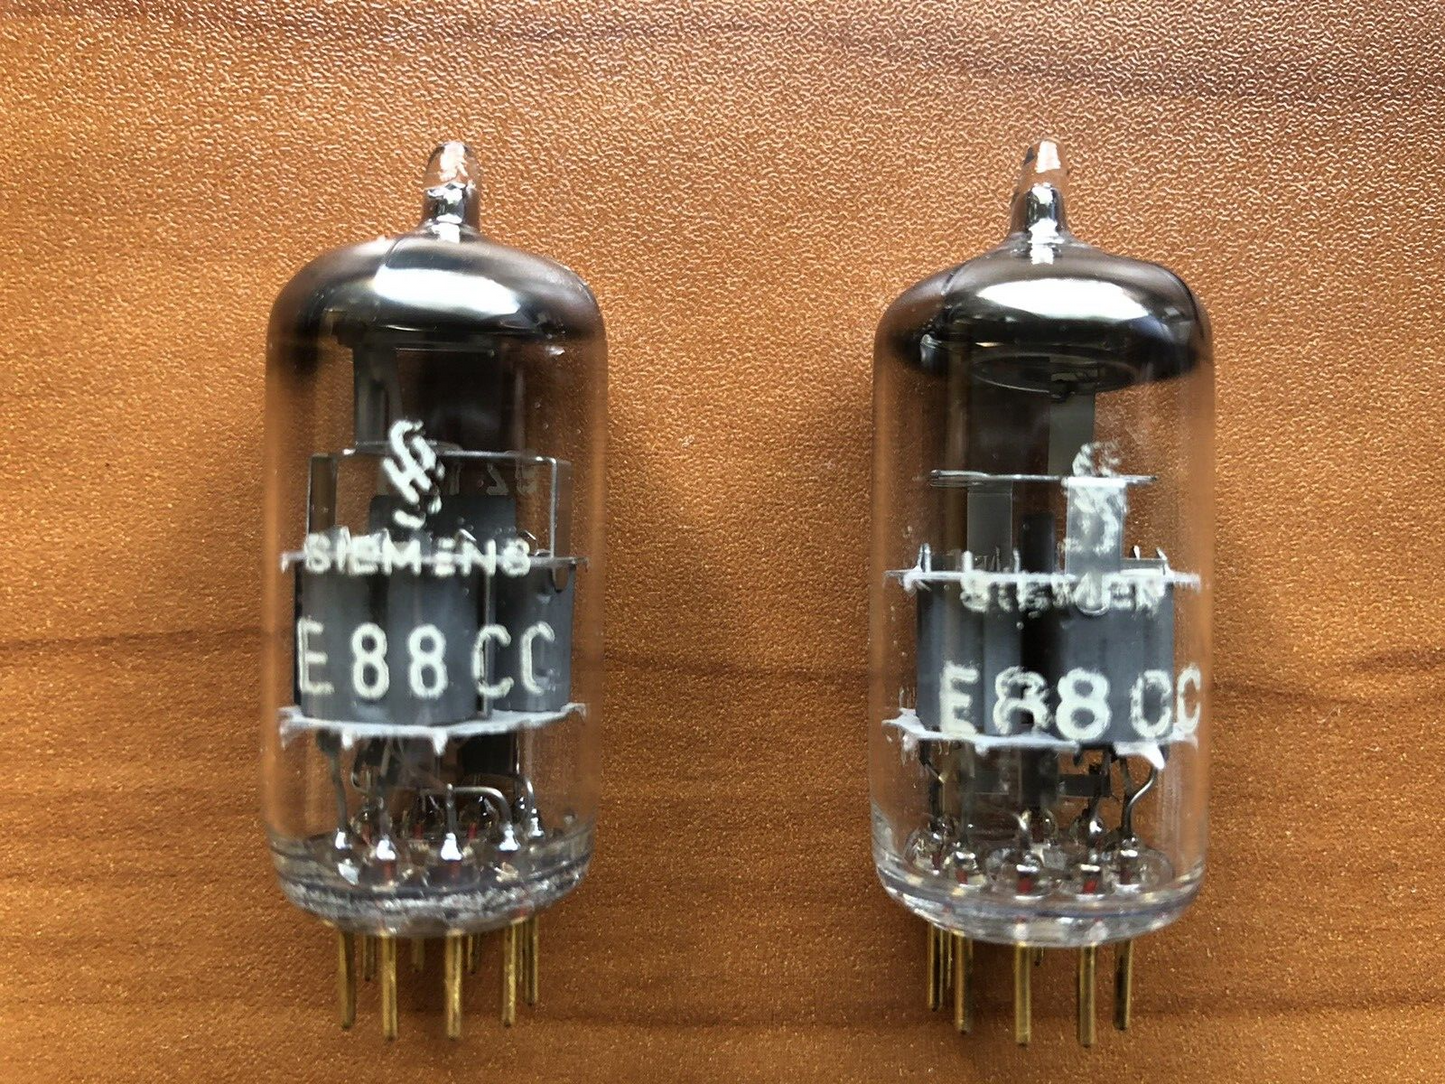 Siemens E88CC 6922 Preamp Tubes Matched Pair Original Box - Munich 1963/64 - NOS